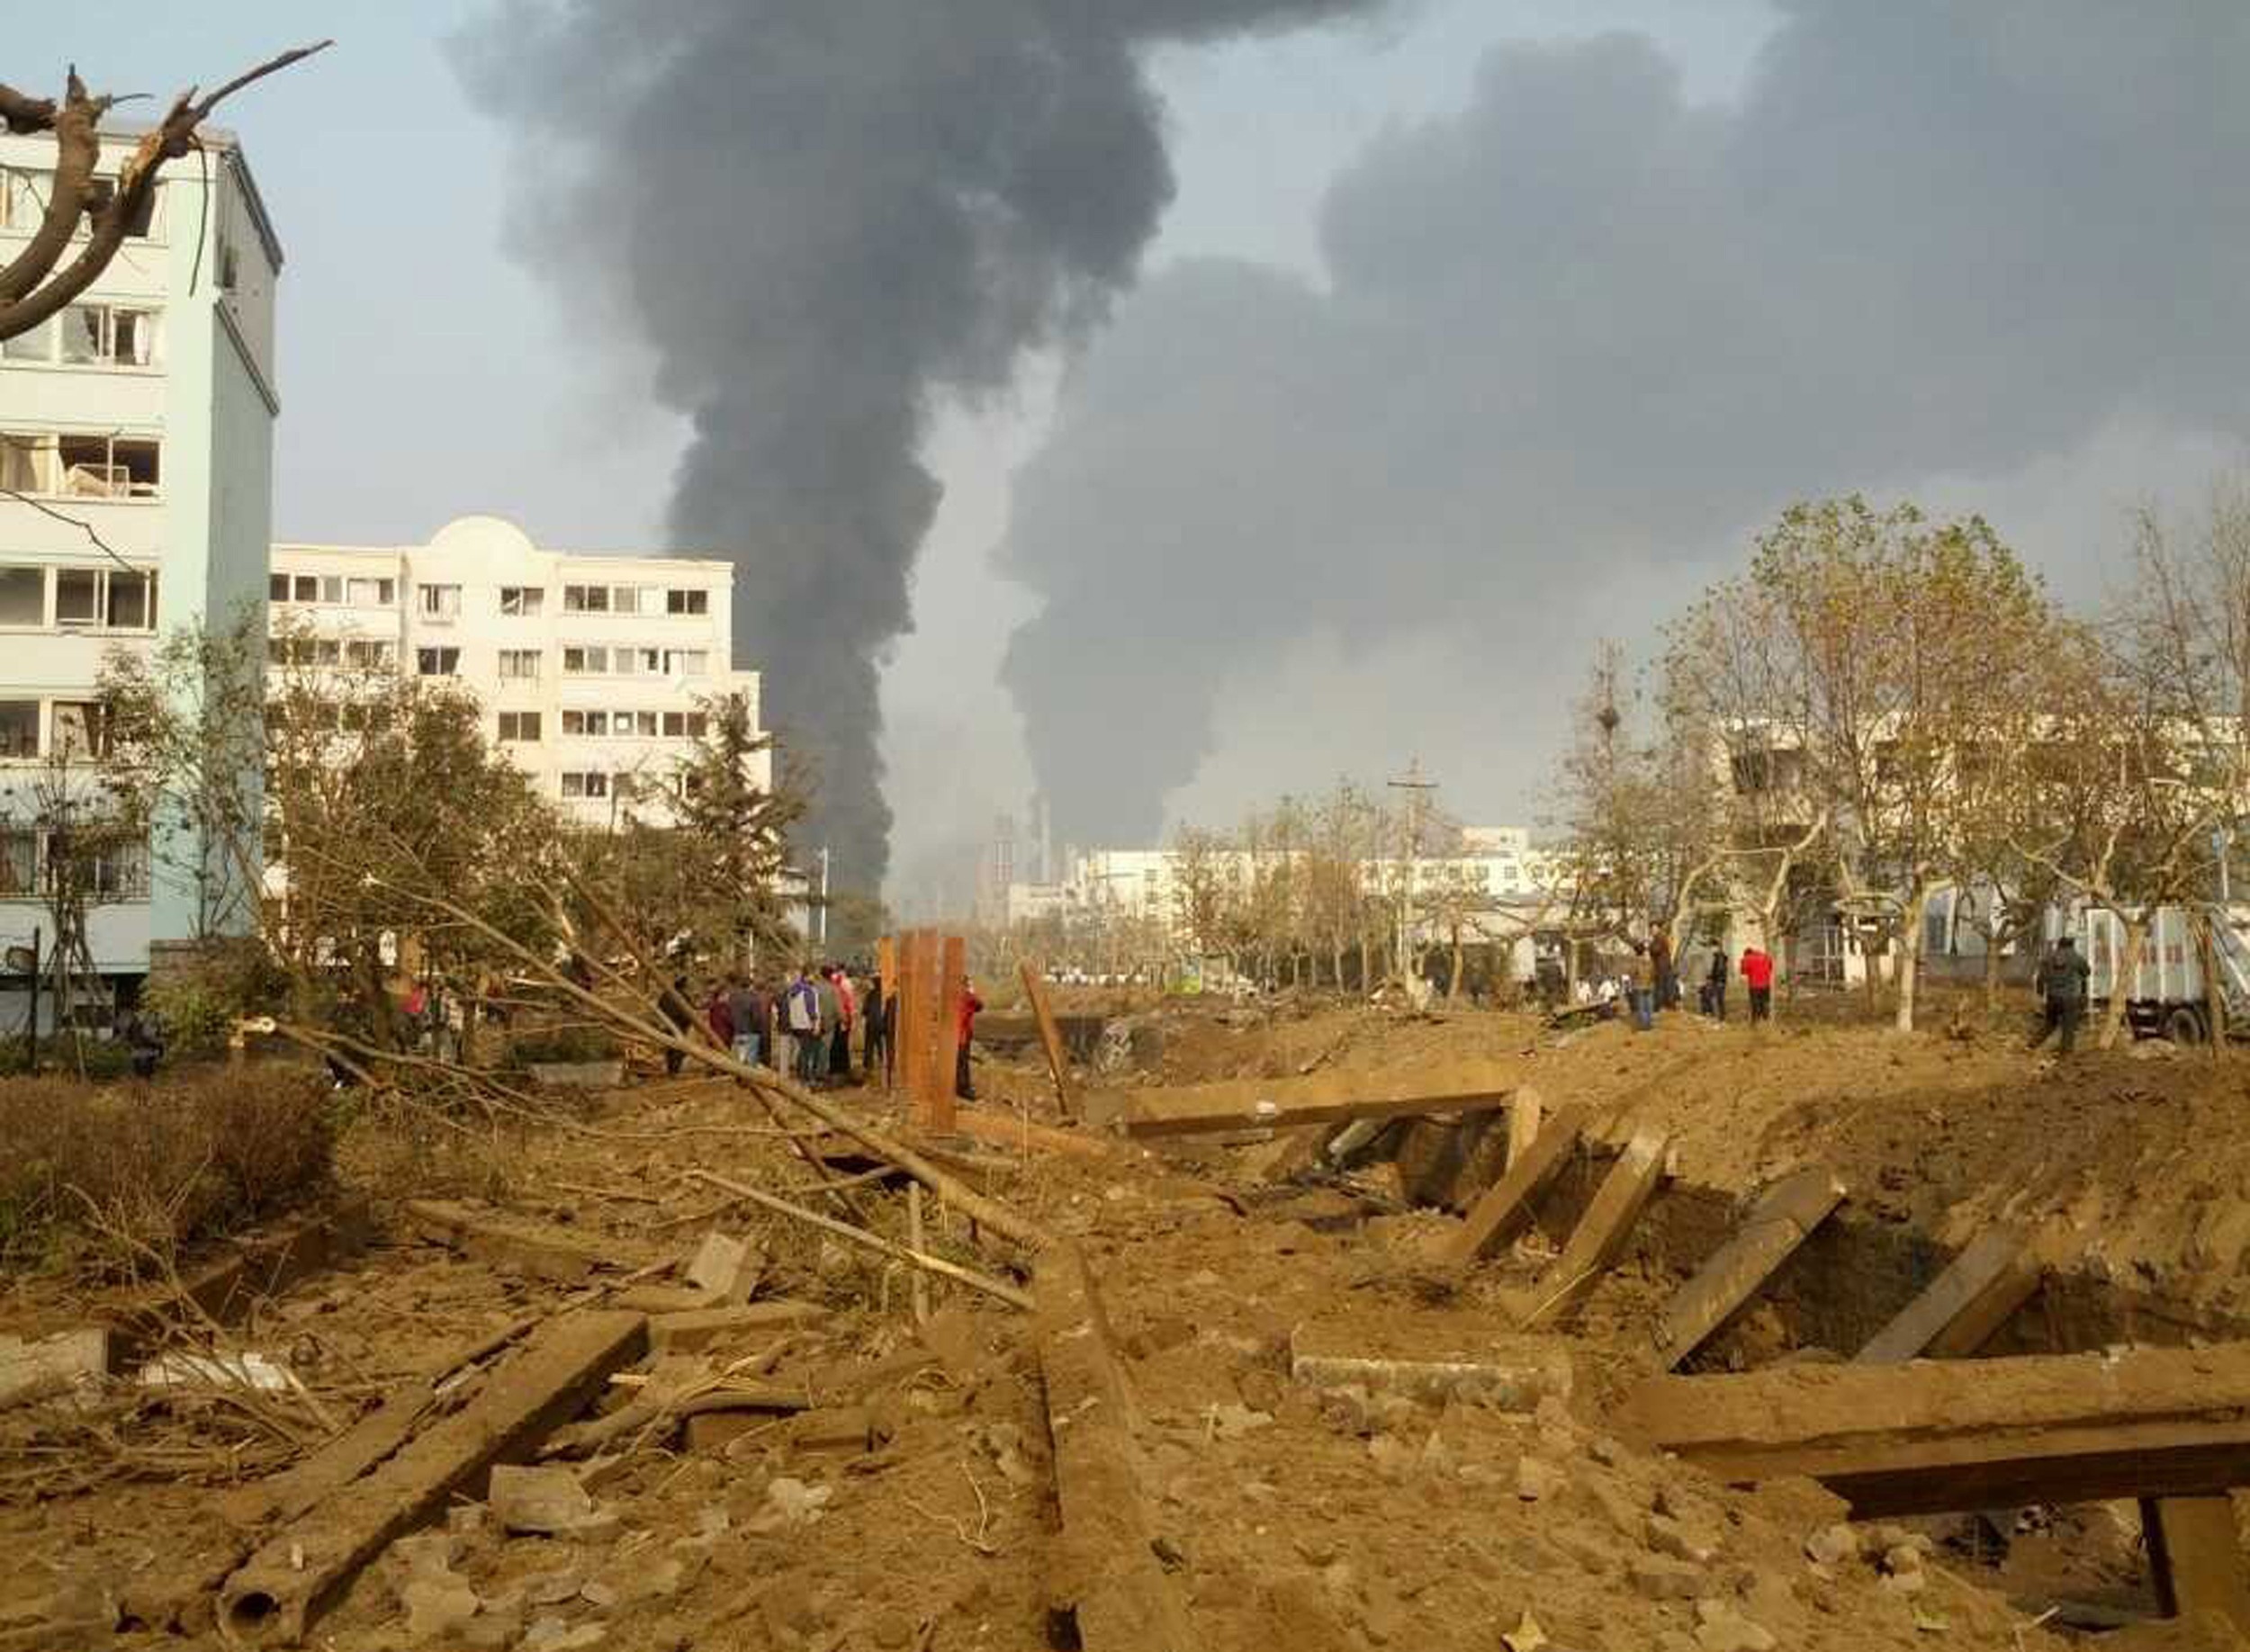 Sinopec oil pipeline blast kills 22 in eastern China: media